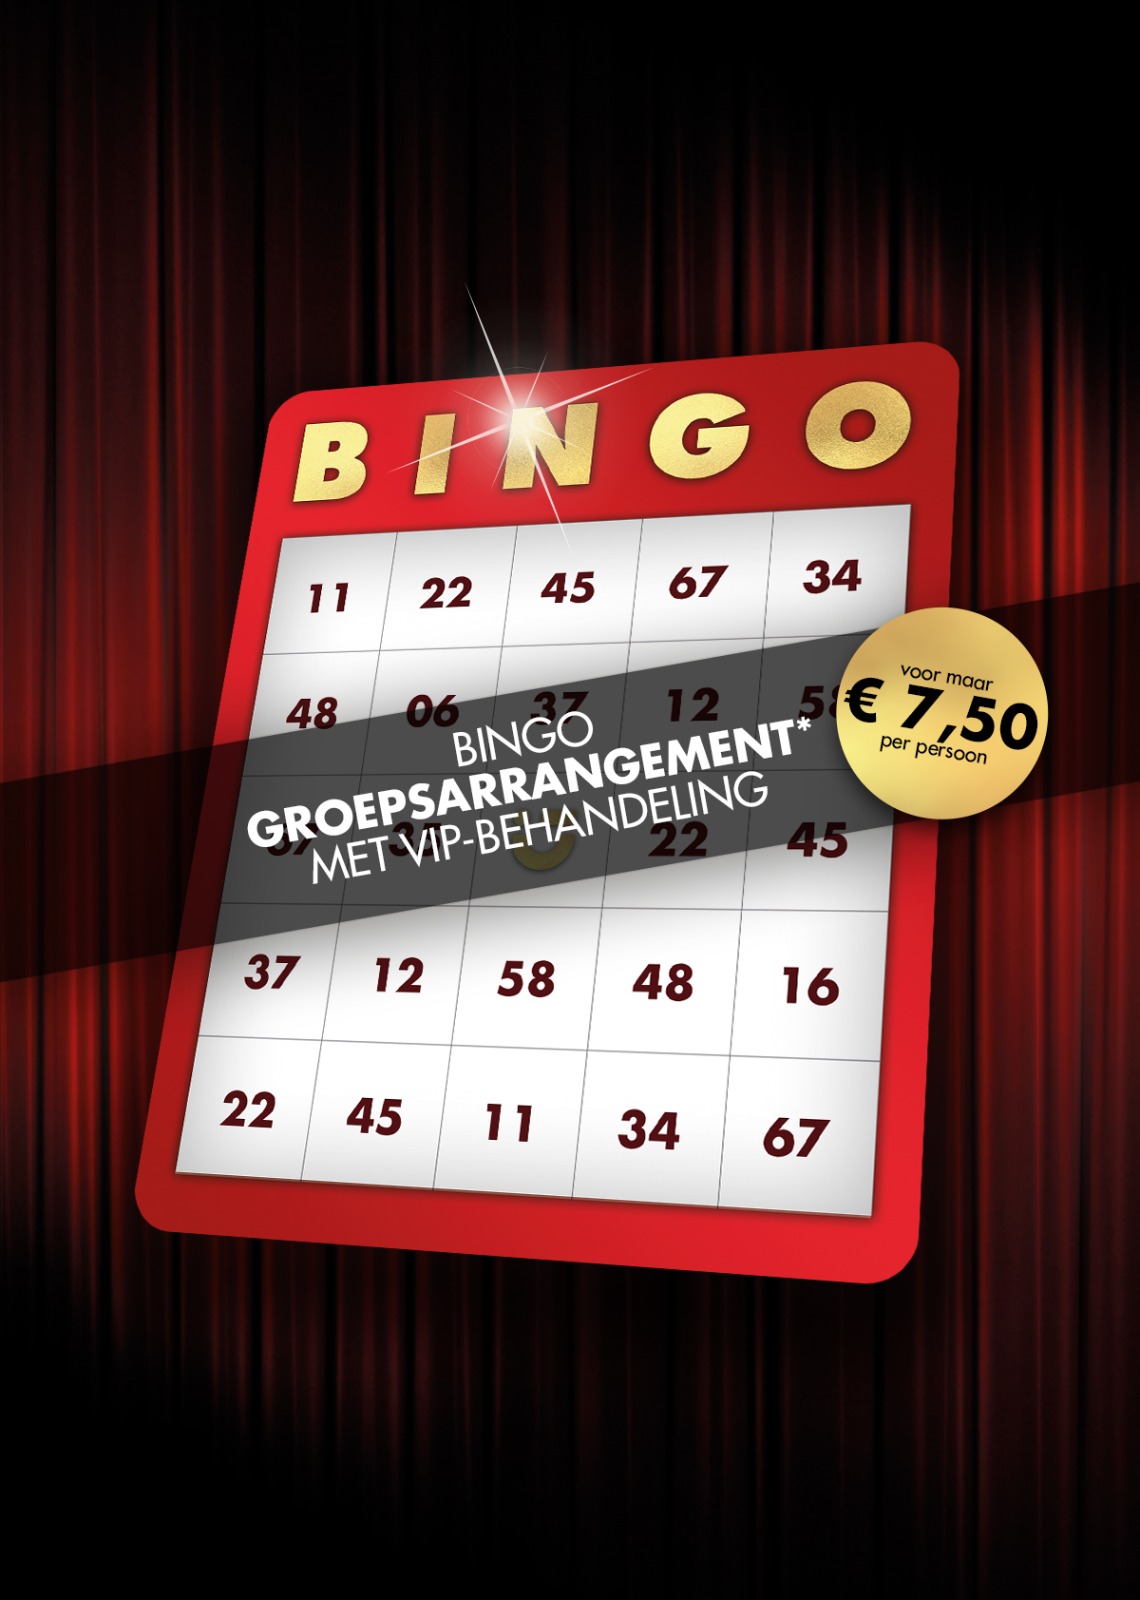 bingo-arrangement-circus-gran-casino-maastricht.jpeg